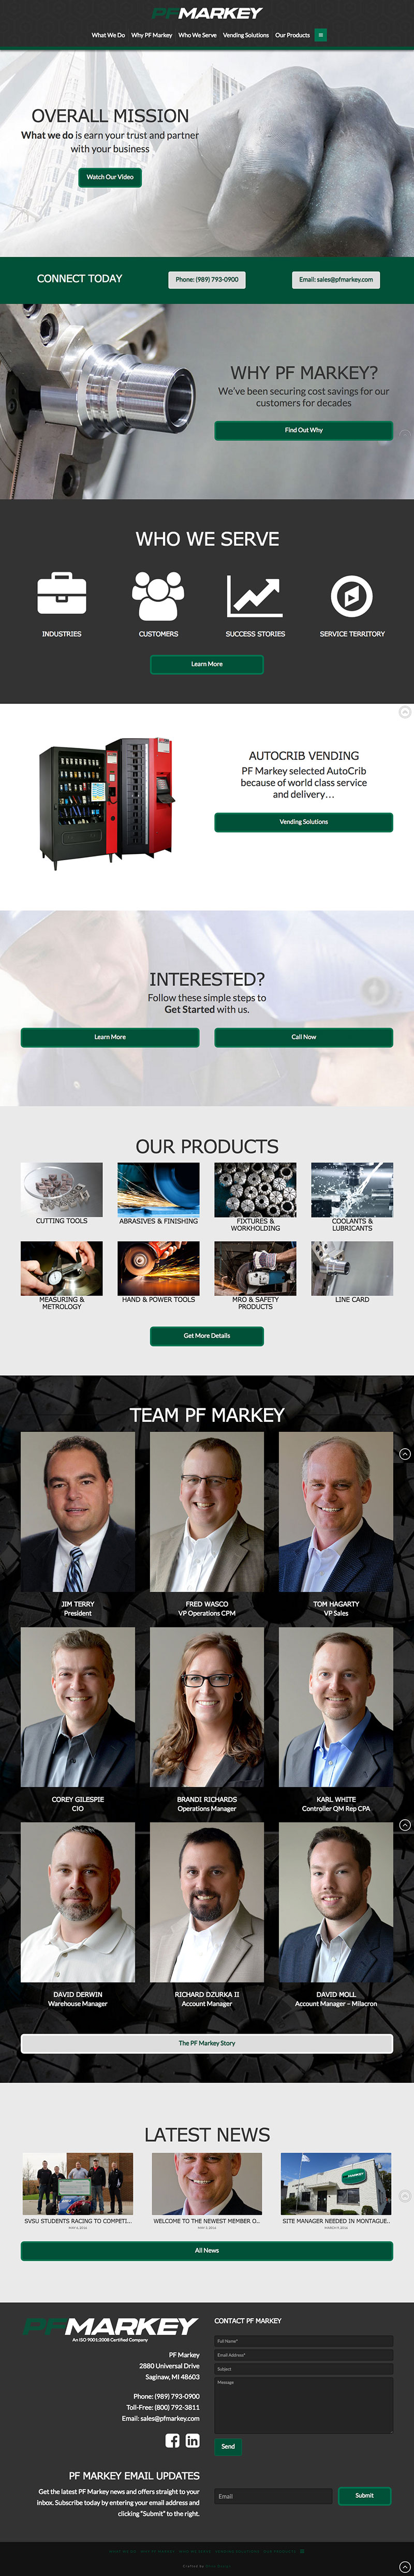 P F Markey homepage